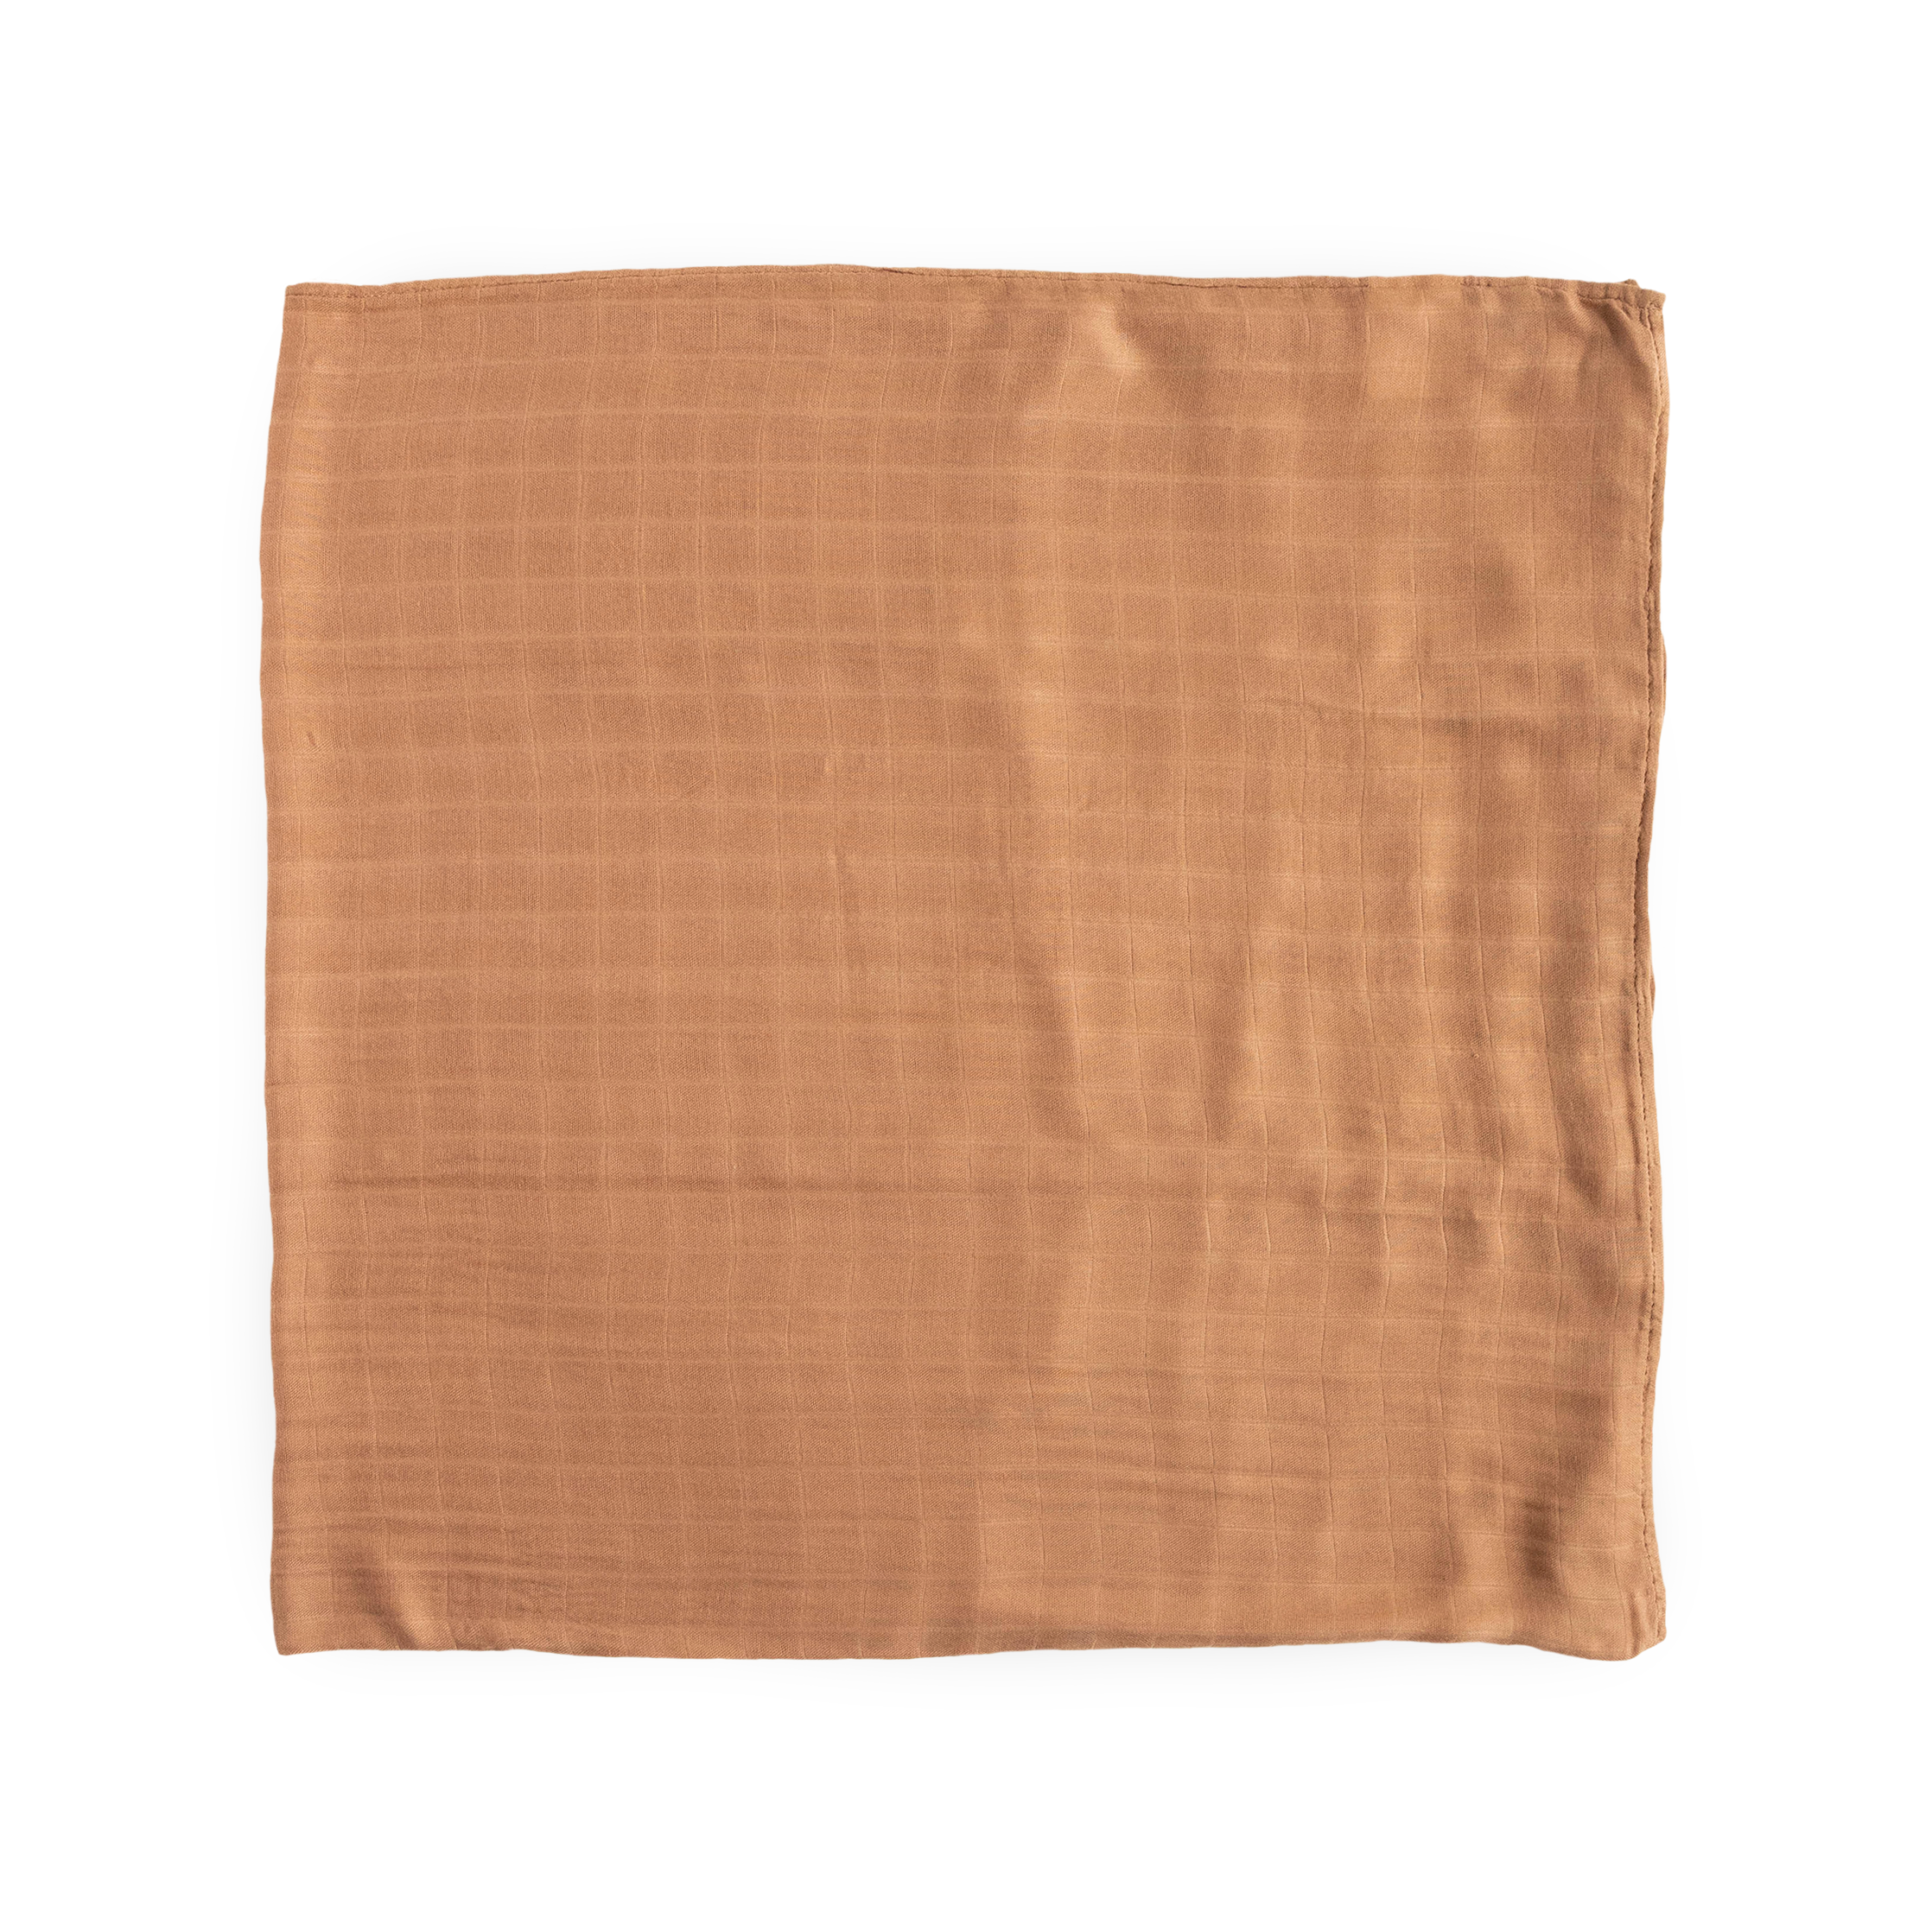 Deluxe Muslin Swaddle Blanket 2 Pack - Caramel